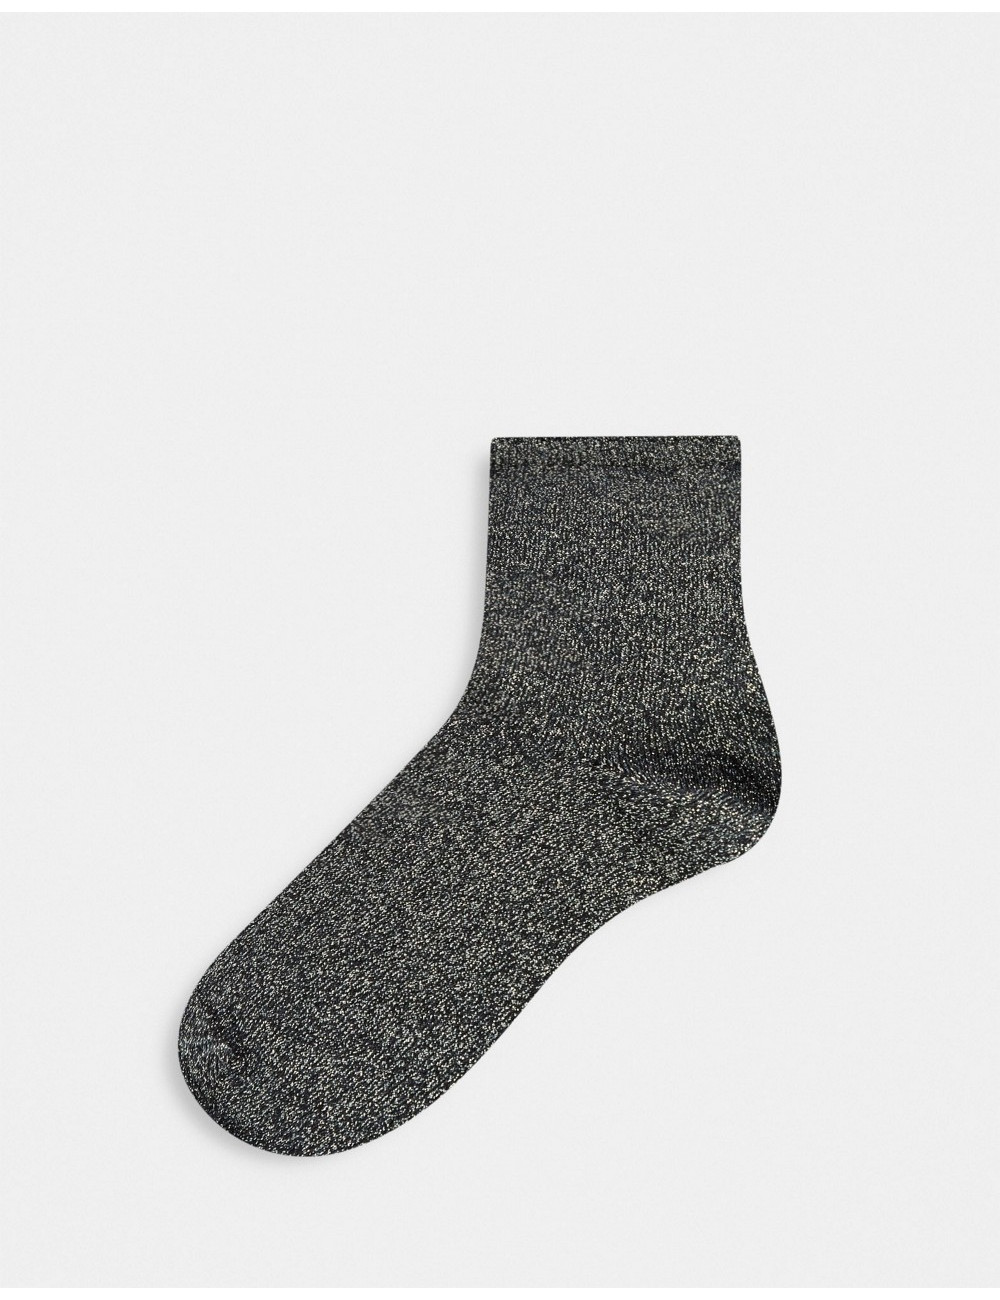 Pieces socks in black glitter